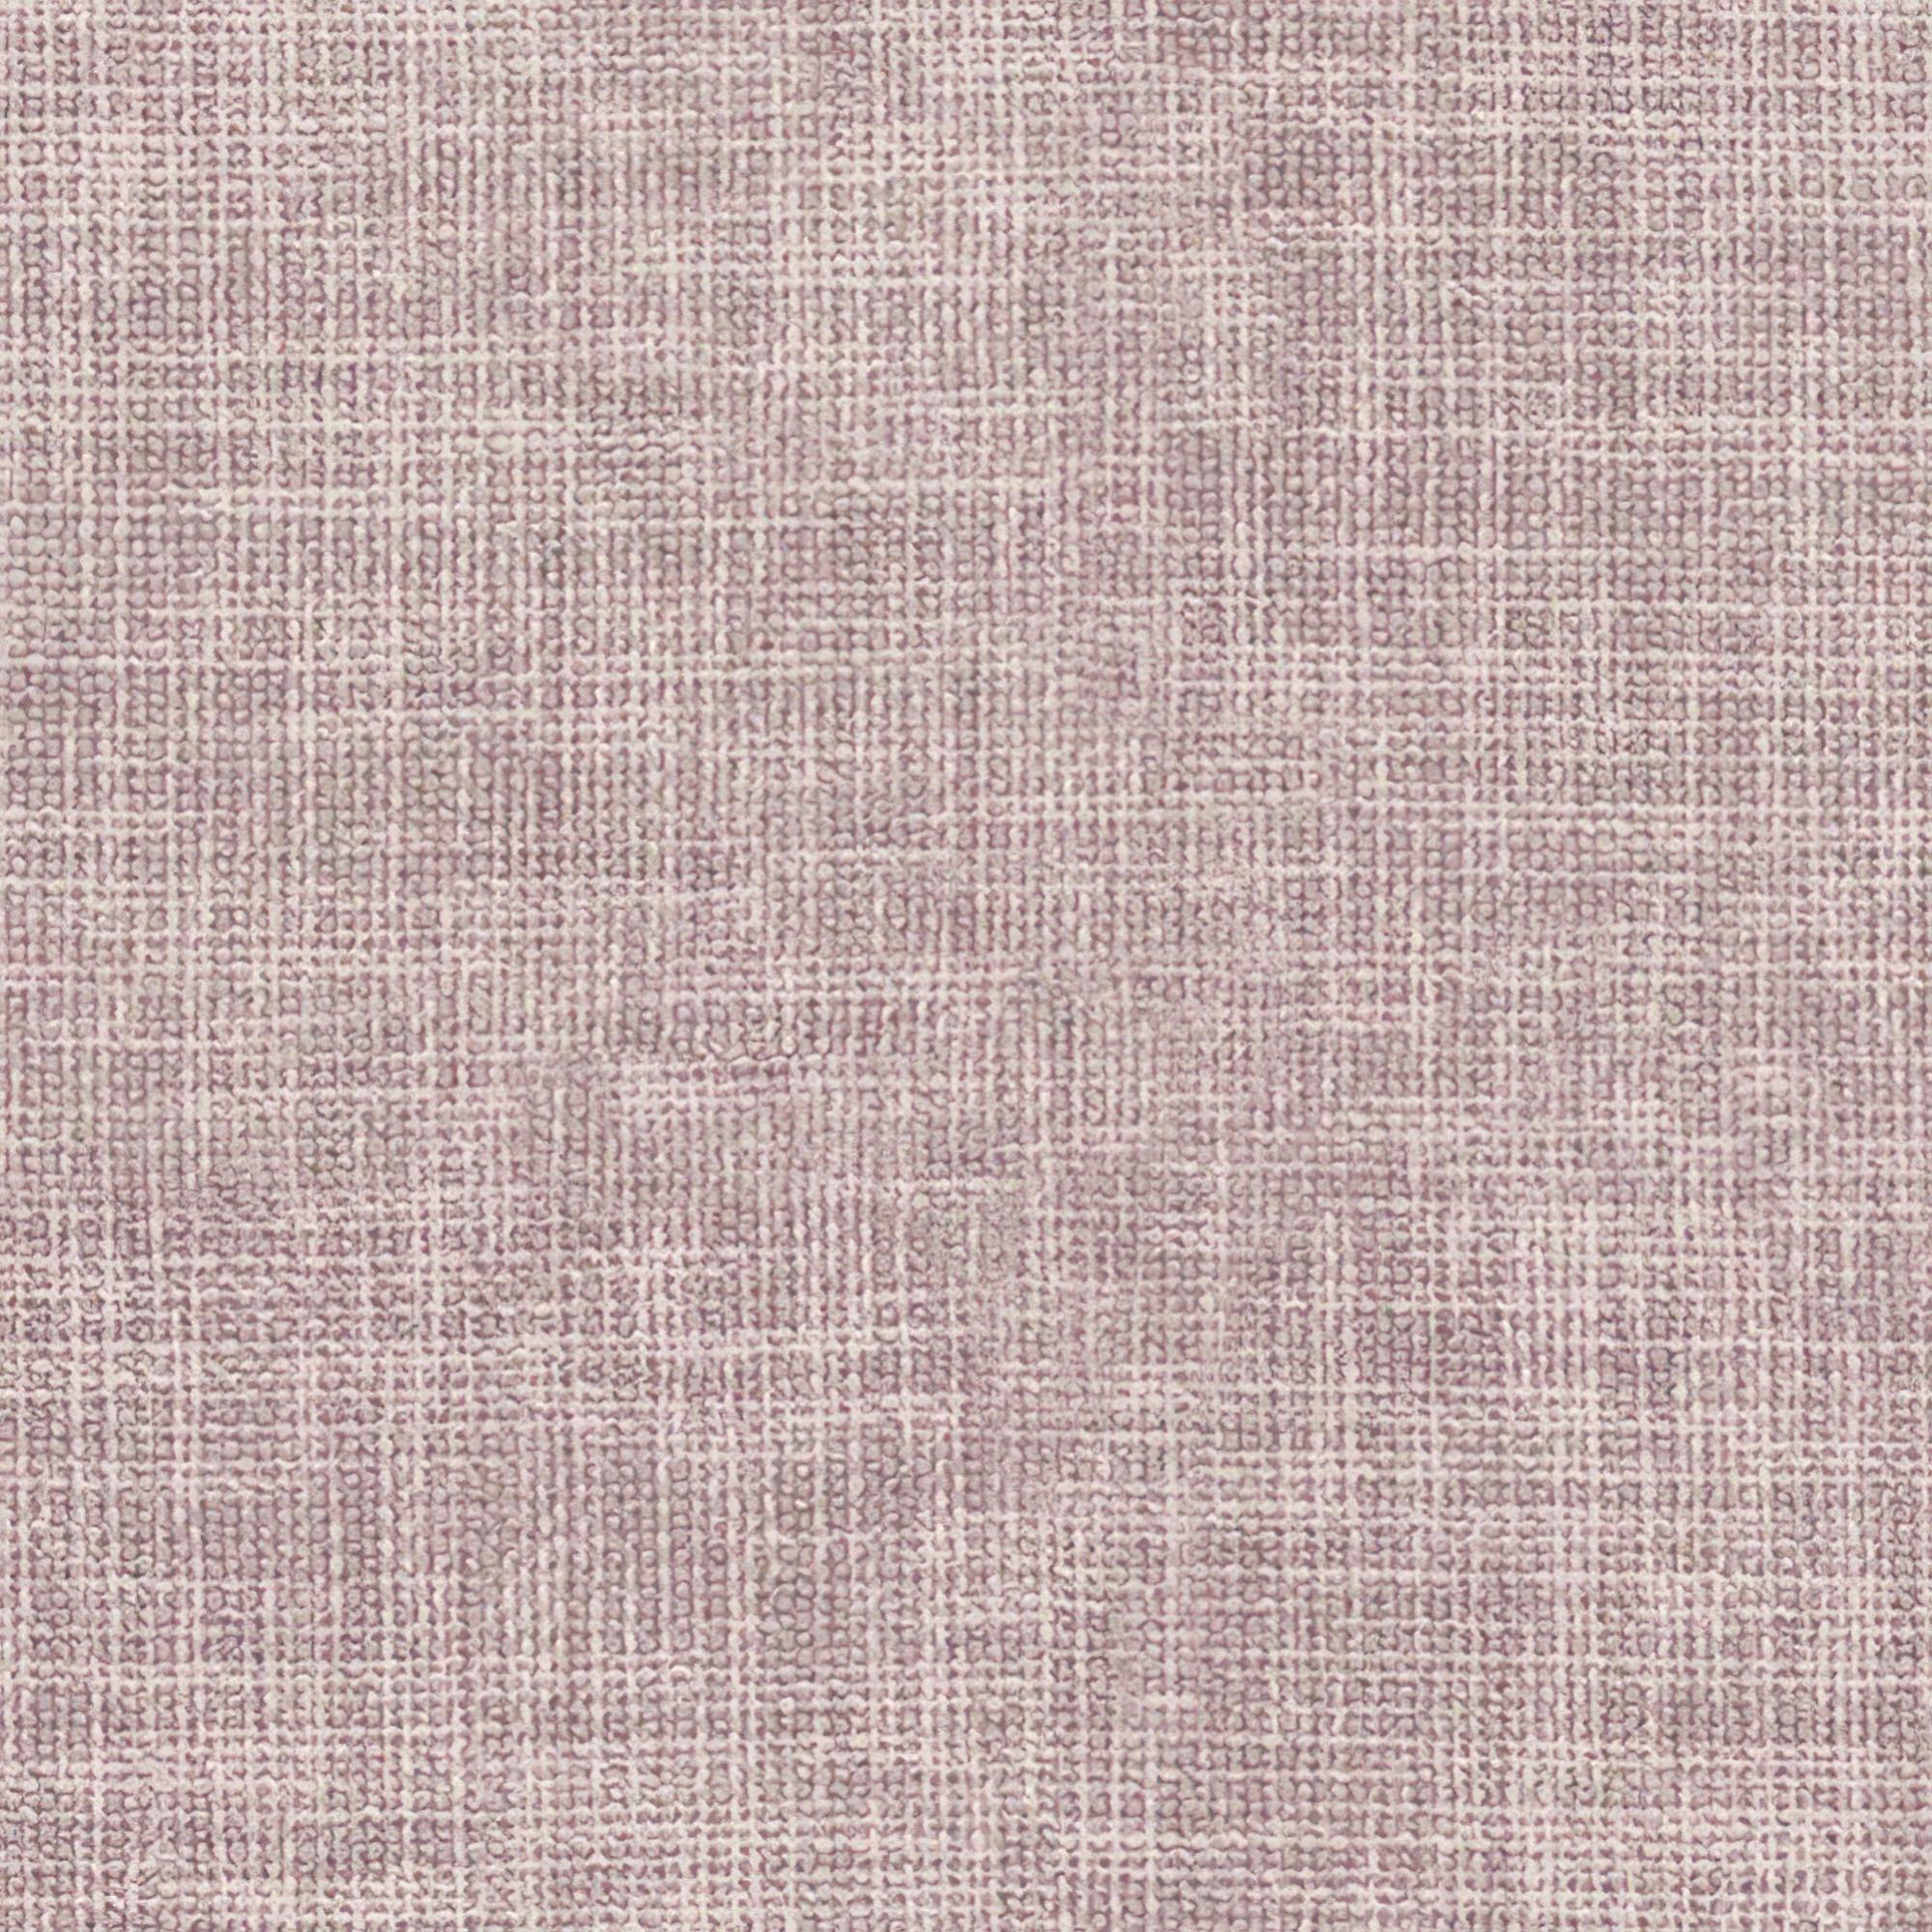 Tela al corte tapicería jacquard angers rosa ancho 140 cm